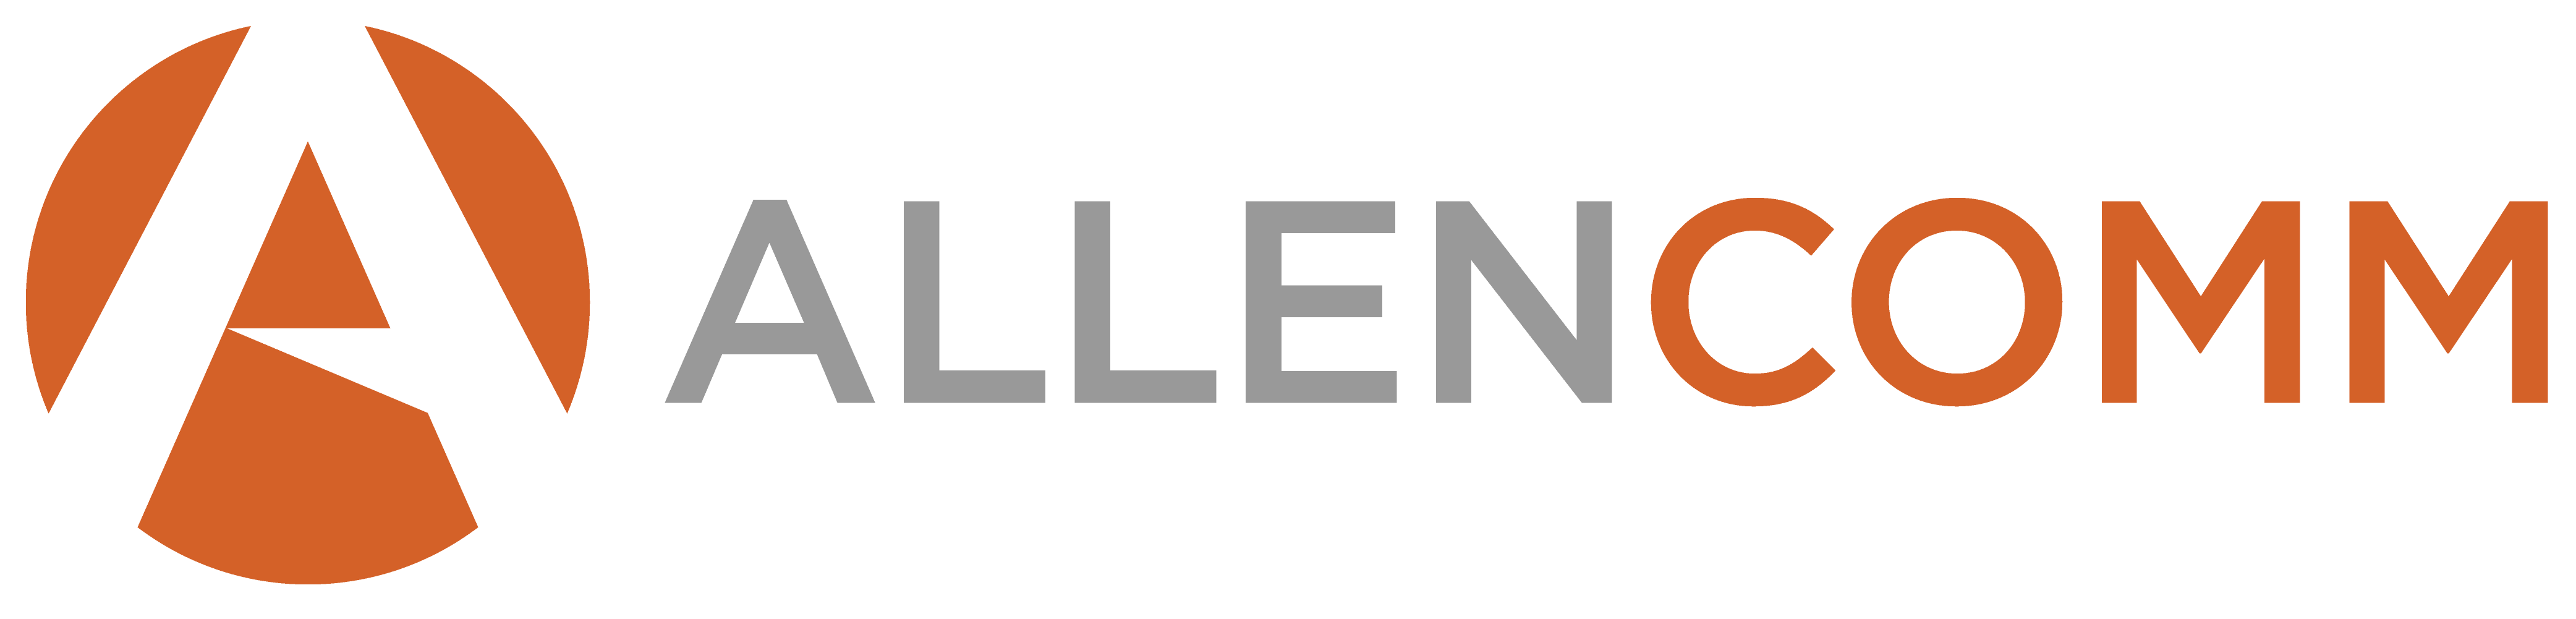 Comm Logo - Corporate Training & eLearning Company - AllenComm - AllenComm